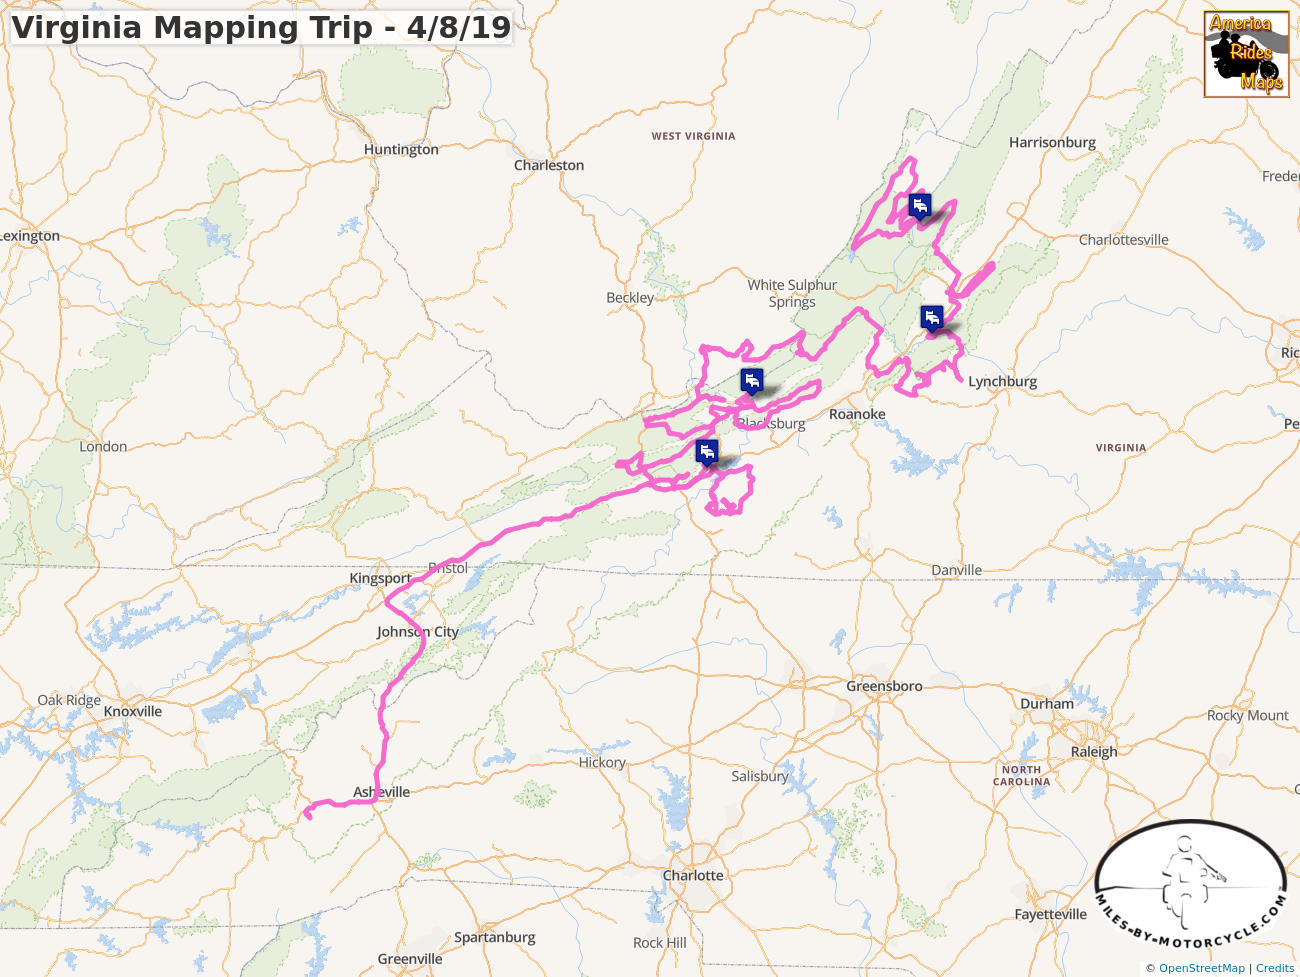 Virginia Mapping Trip - 4/8/19